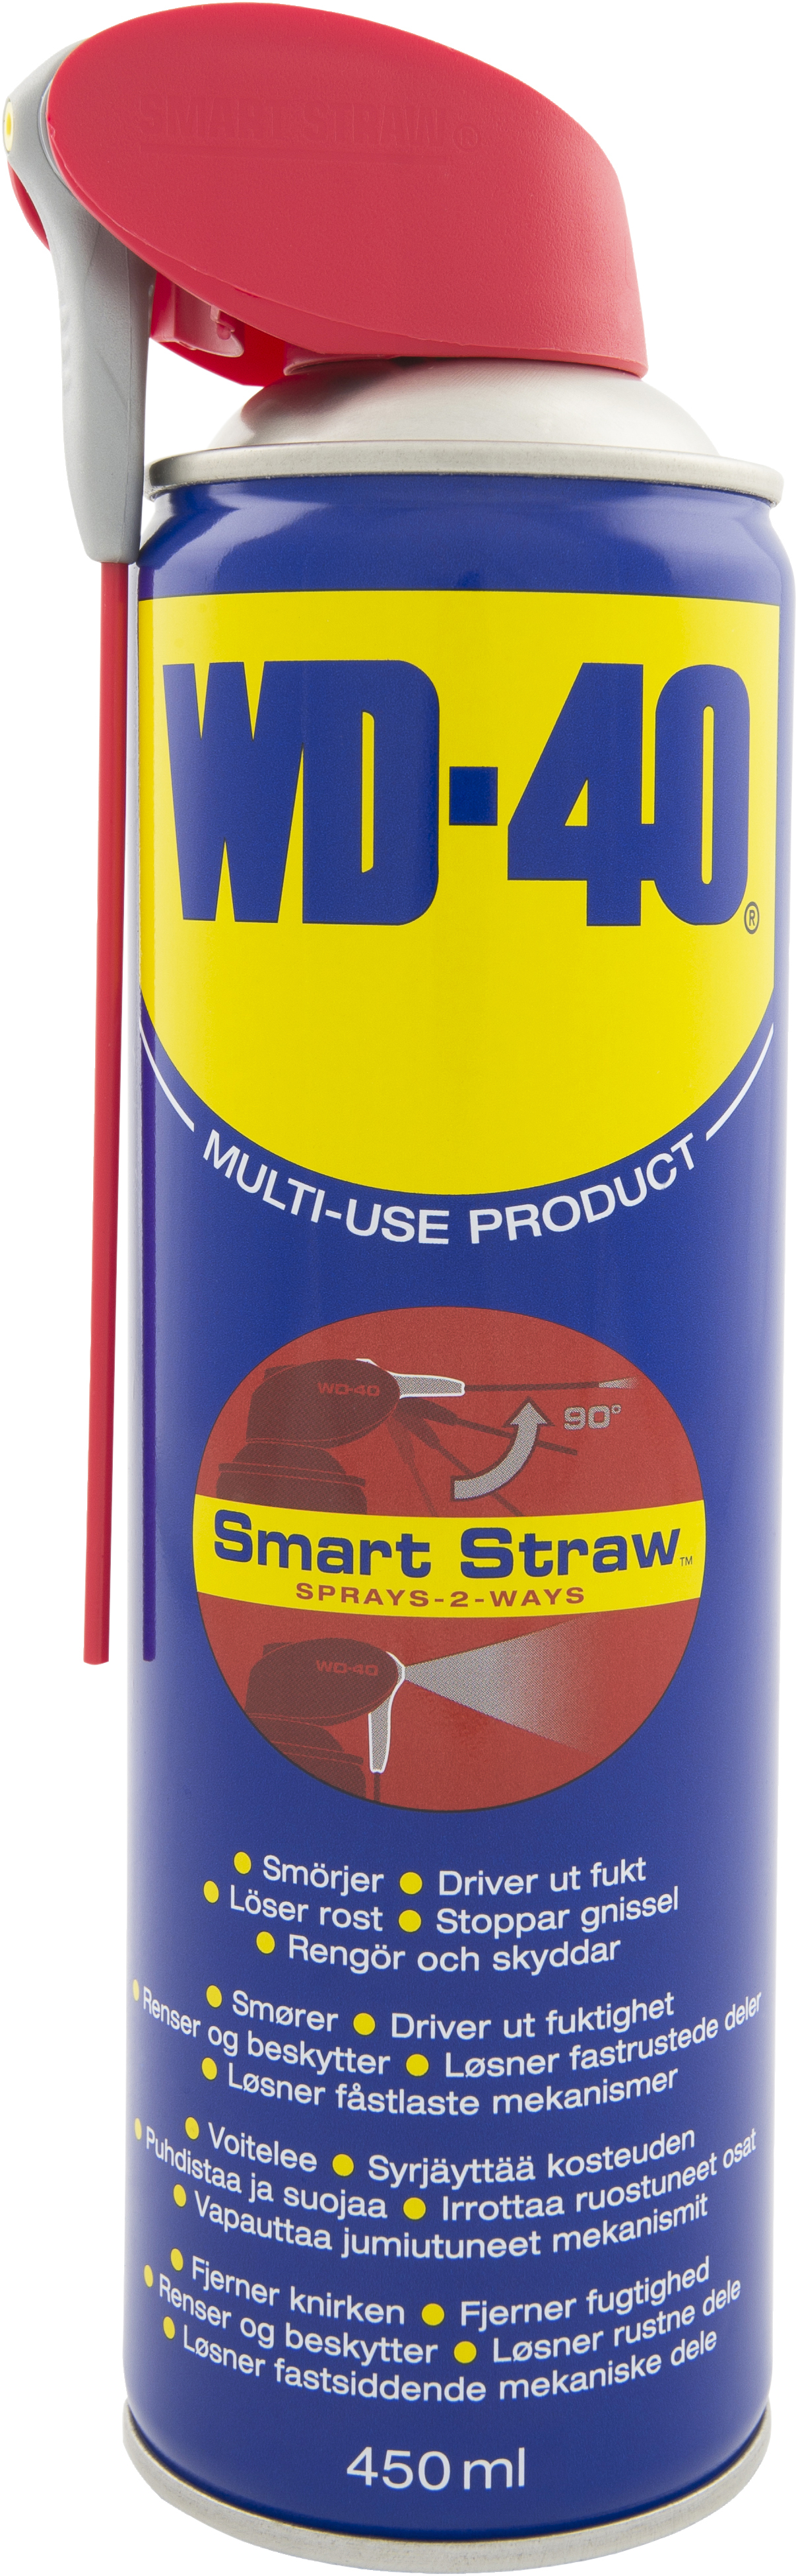 WD-40 Multispray Smart Straw 450ml